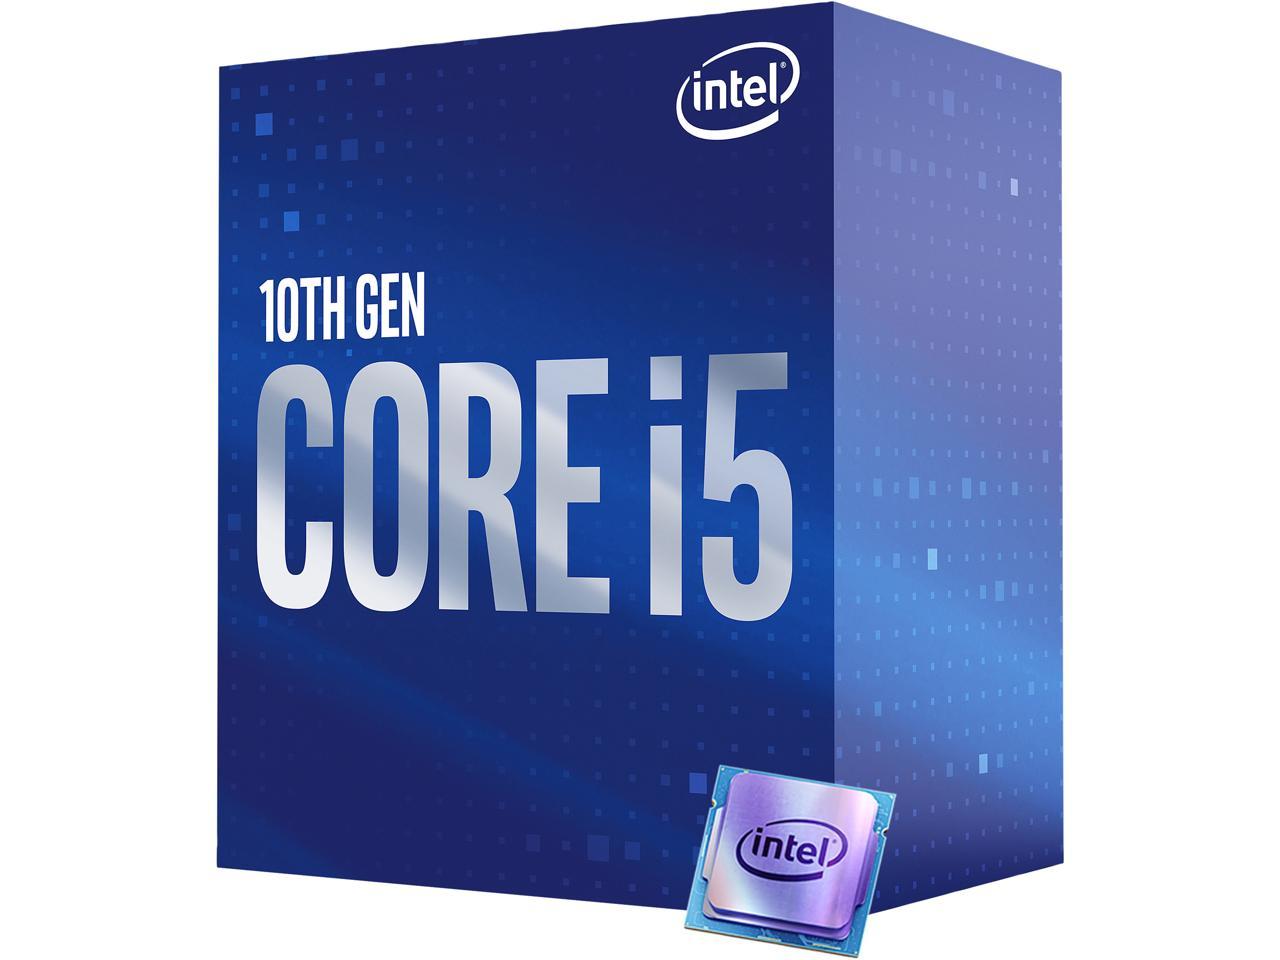 Intel Core i5-10400 Comet Lake 6-Core 2.9 GHz LGA 120 BX8070110400 CPU Processor + Avengers $169.99 @ Newegg